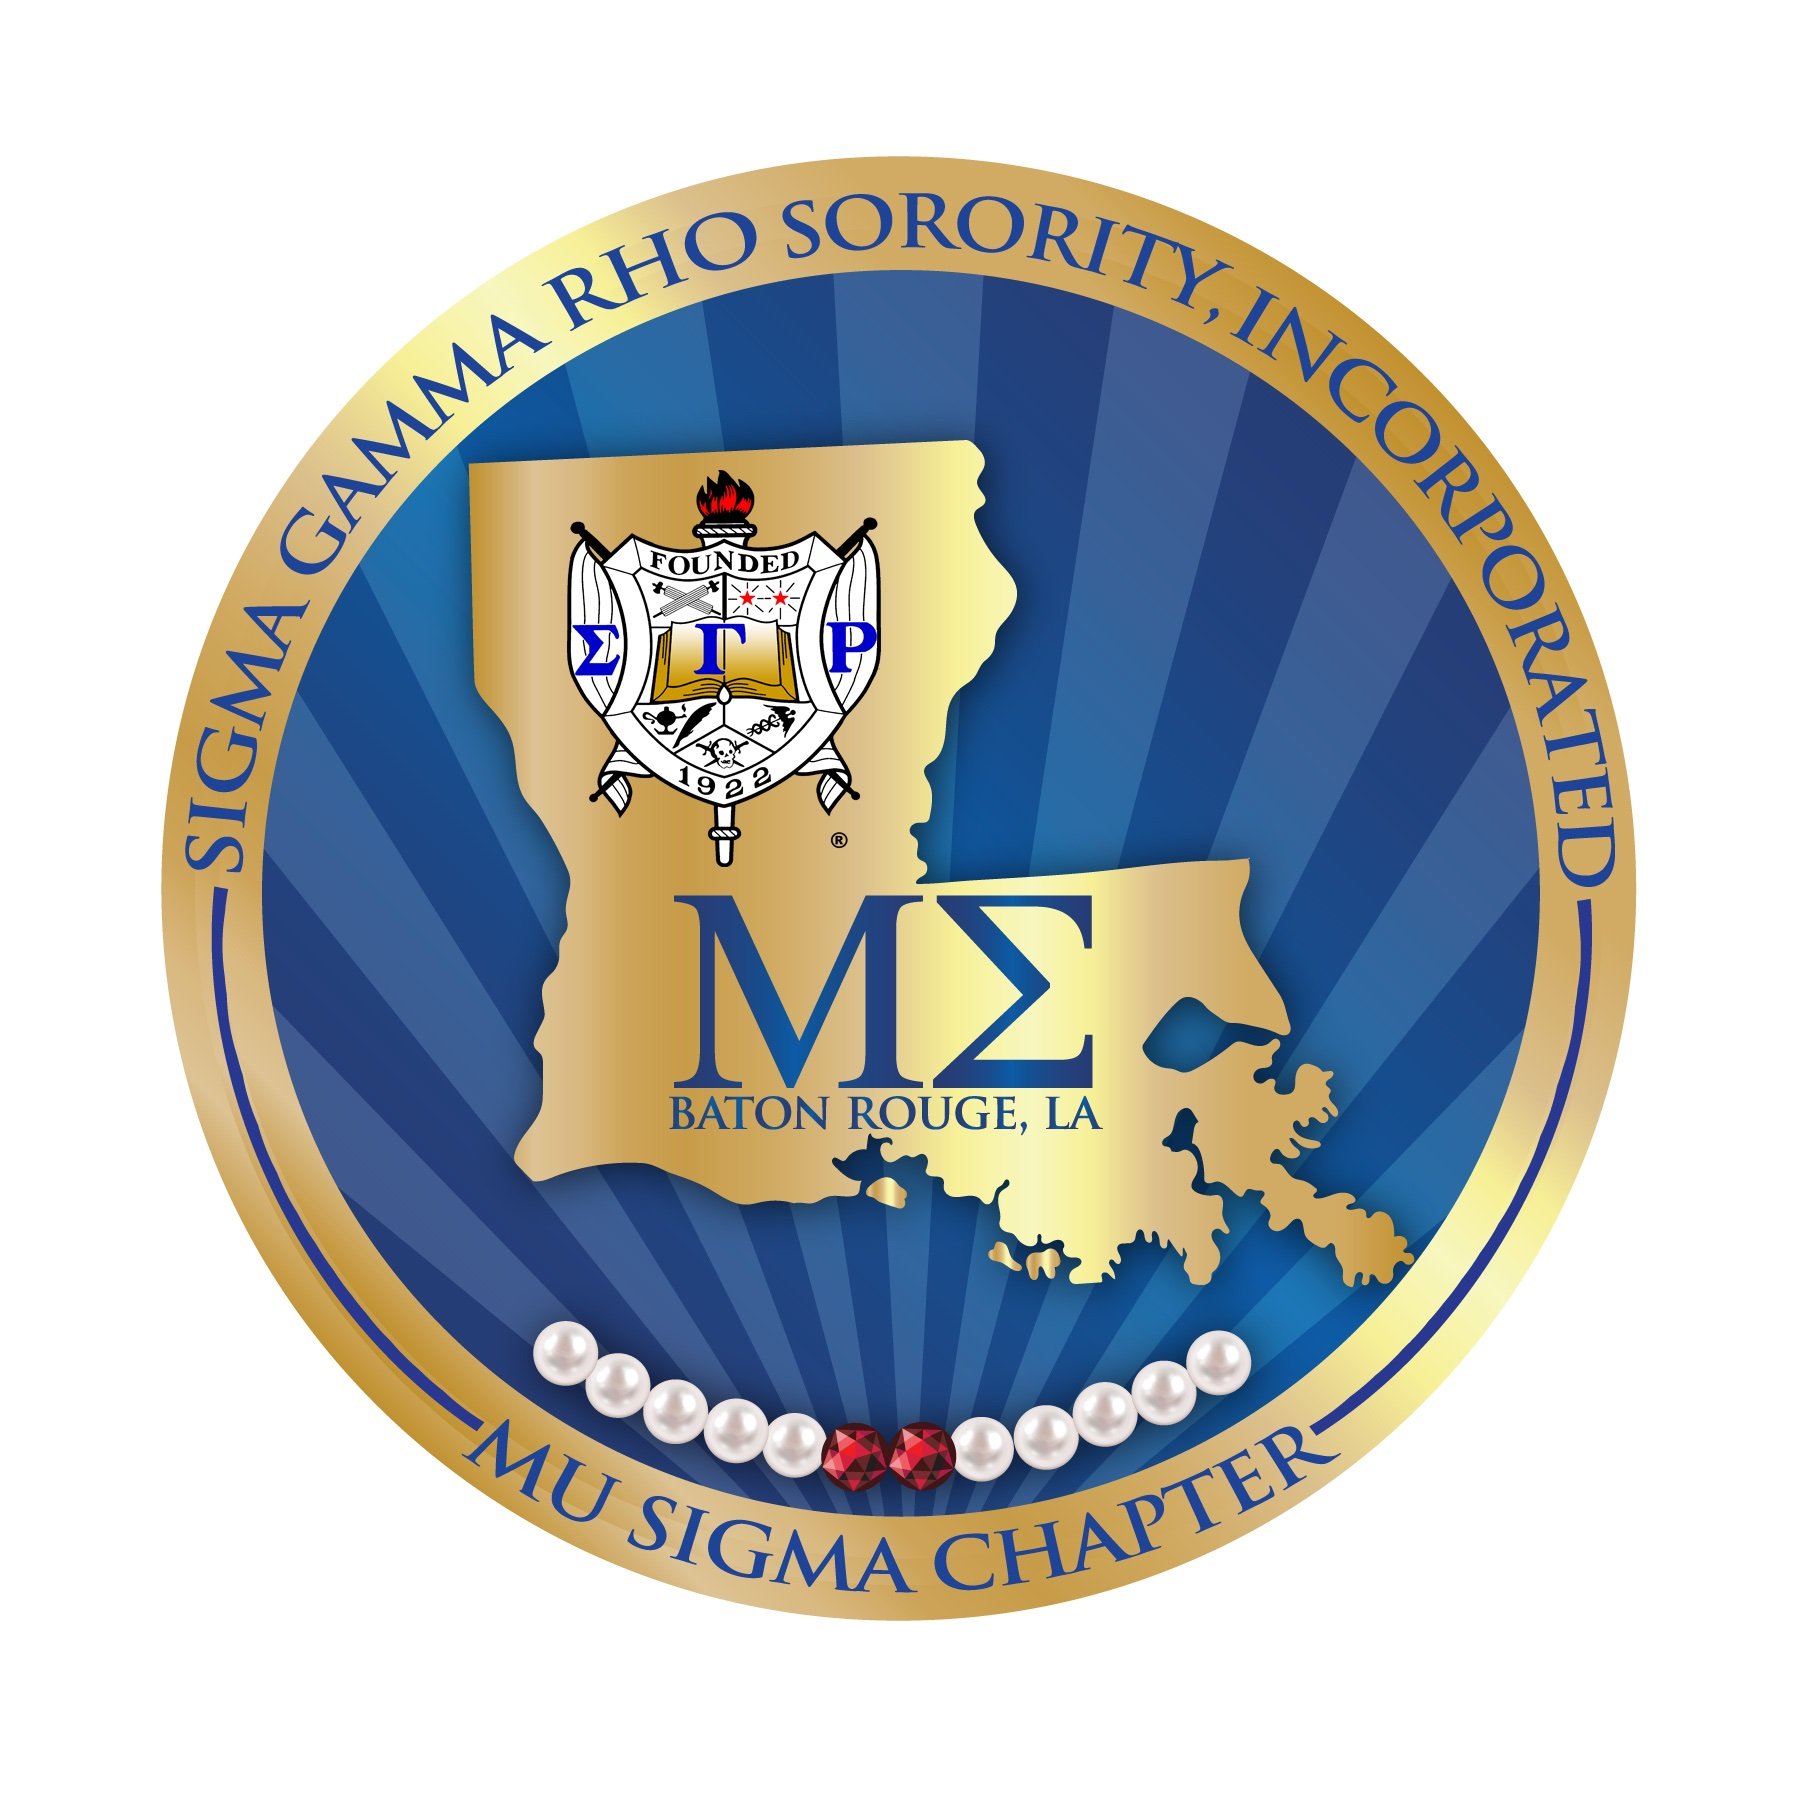 Mu Sigma Chapter of Sigma Gamma Rho Sorority, Incorporated was chartered December 8, 1945 in Baton Rouge, LA.